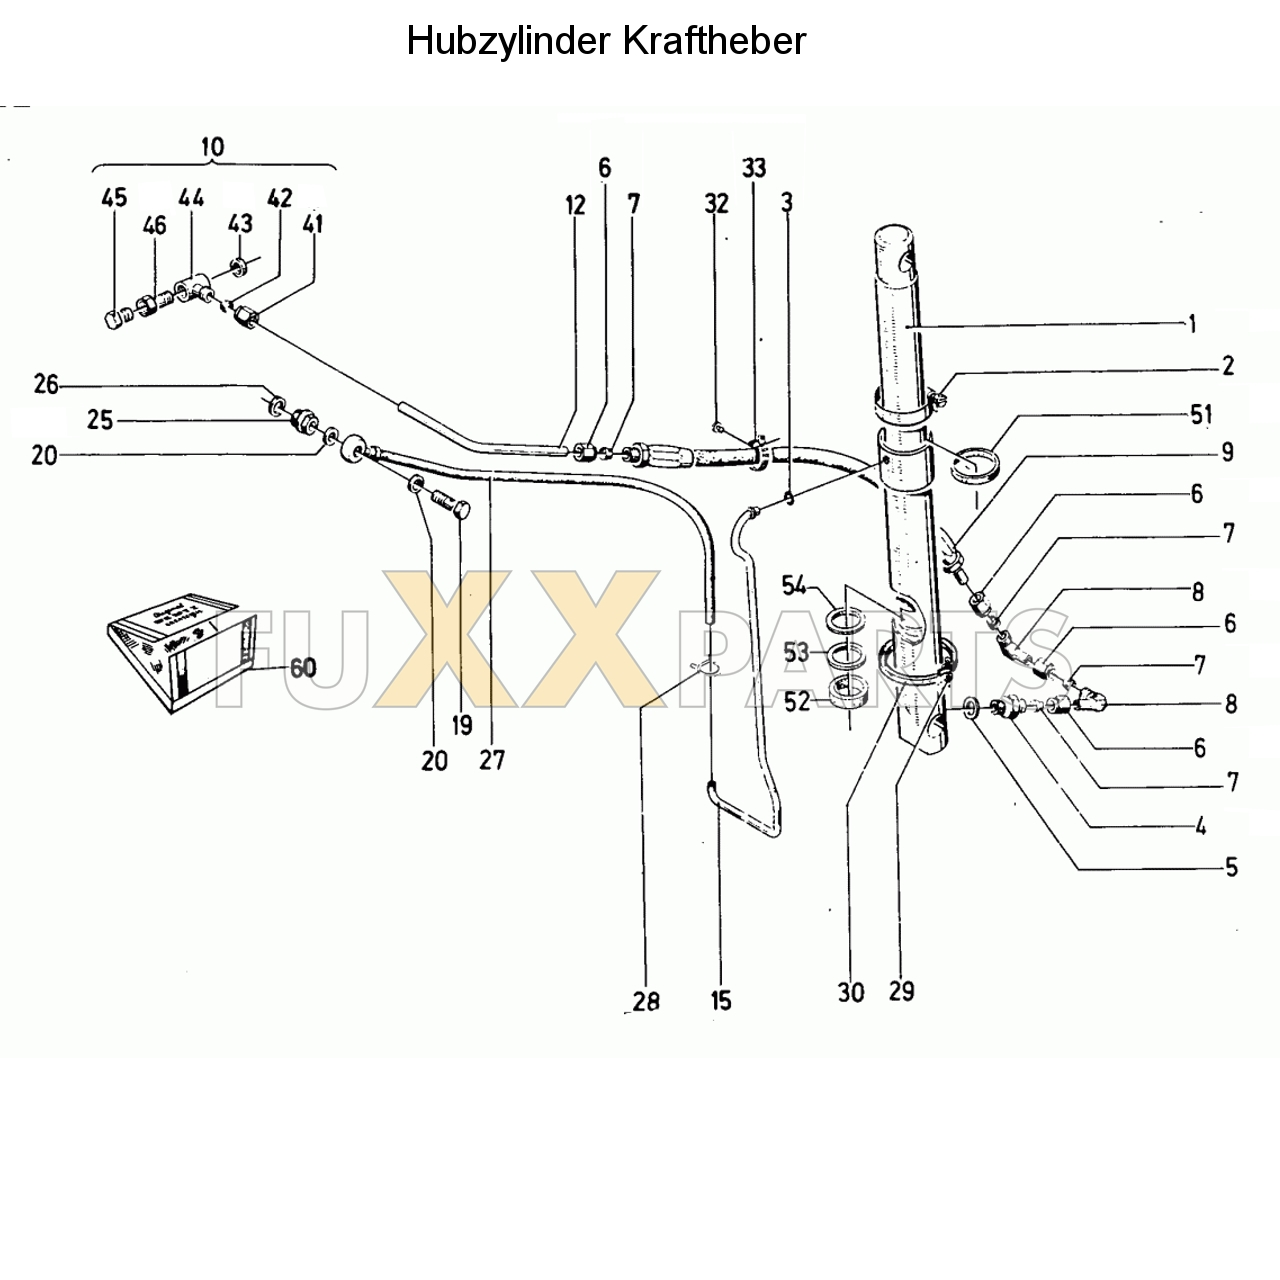 D 8006 Hubzylinder Kraftheber